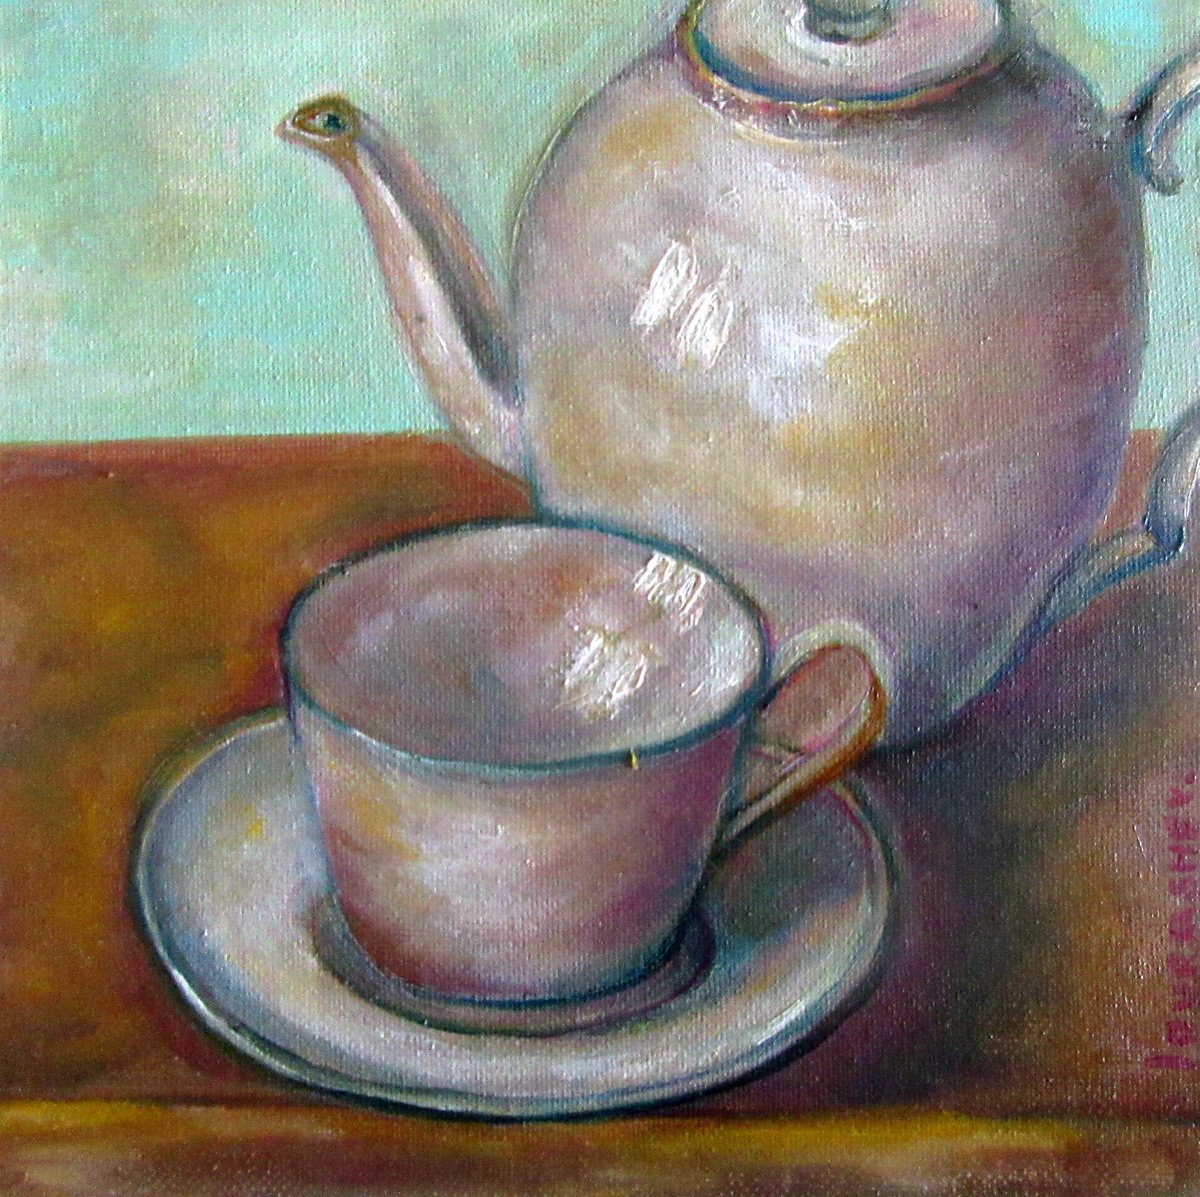 Teatime (small still life) 20x20cm/8x8 in by Katia Ricci